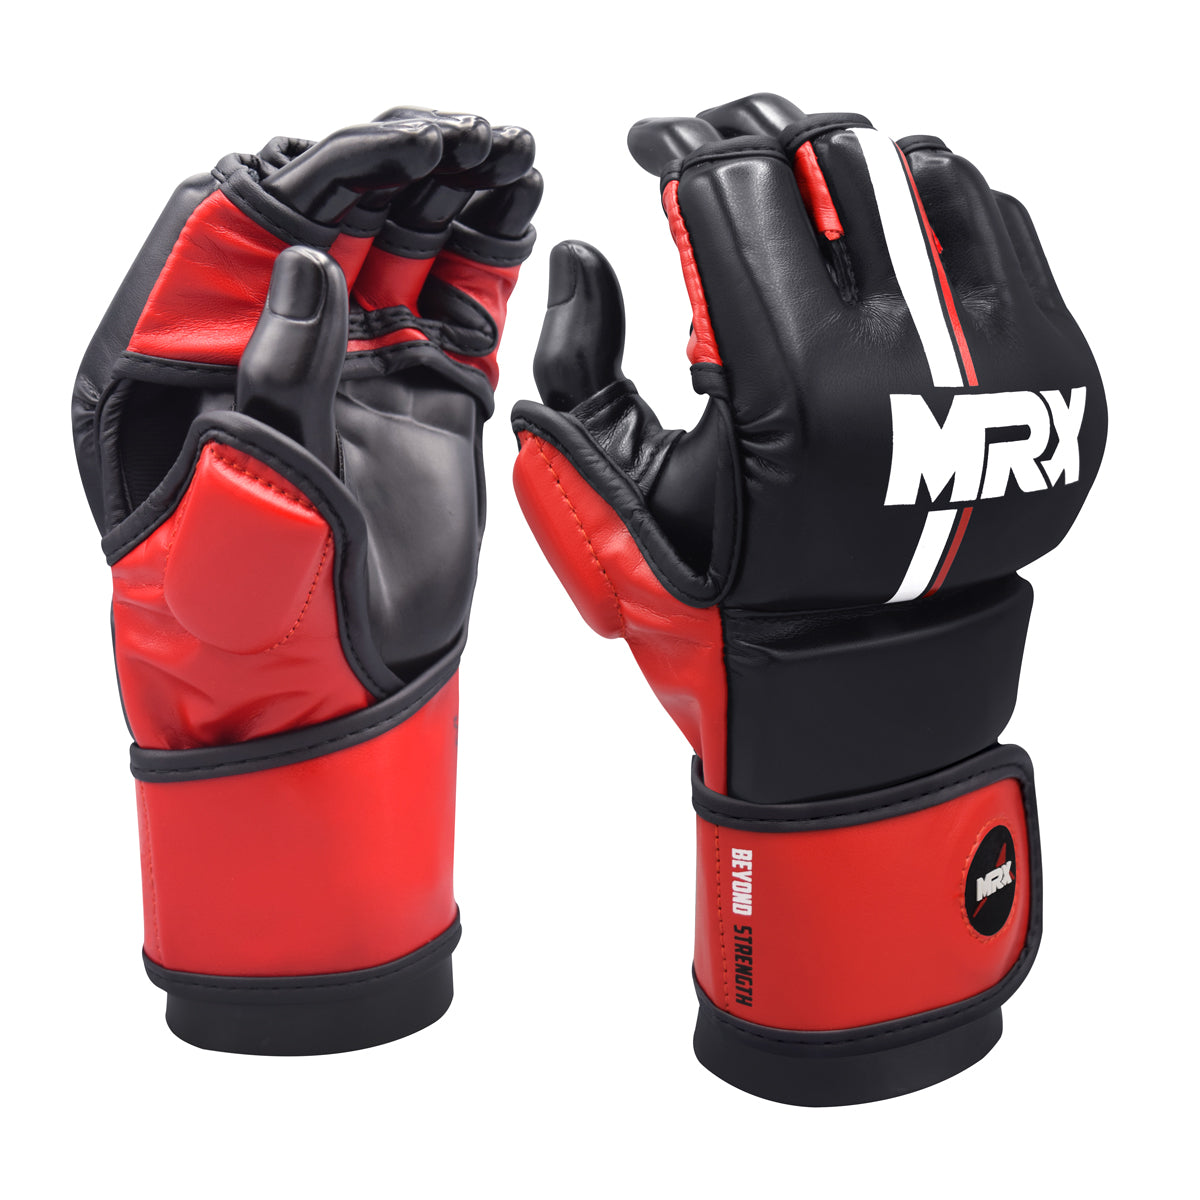 MRX Men’s Boxing Sparring Shooter Gloves Training MMA Kickboxing Punching